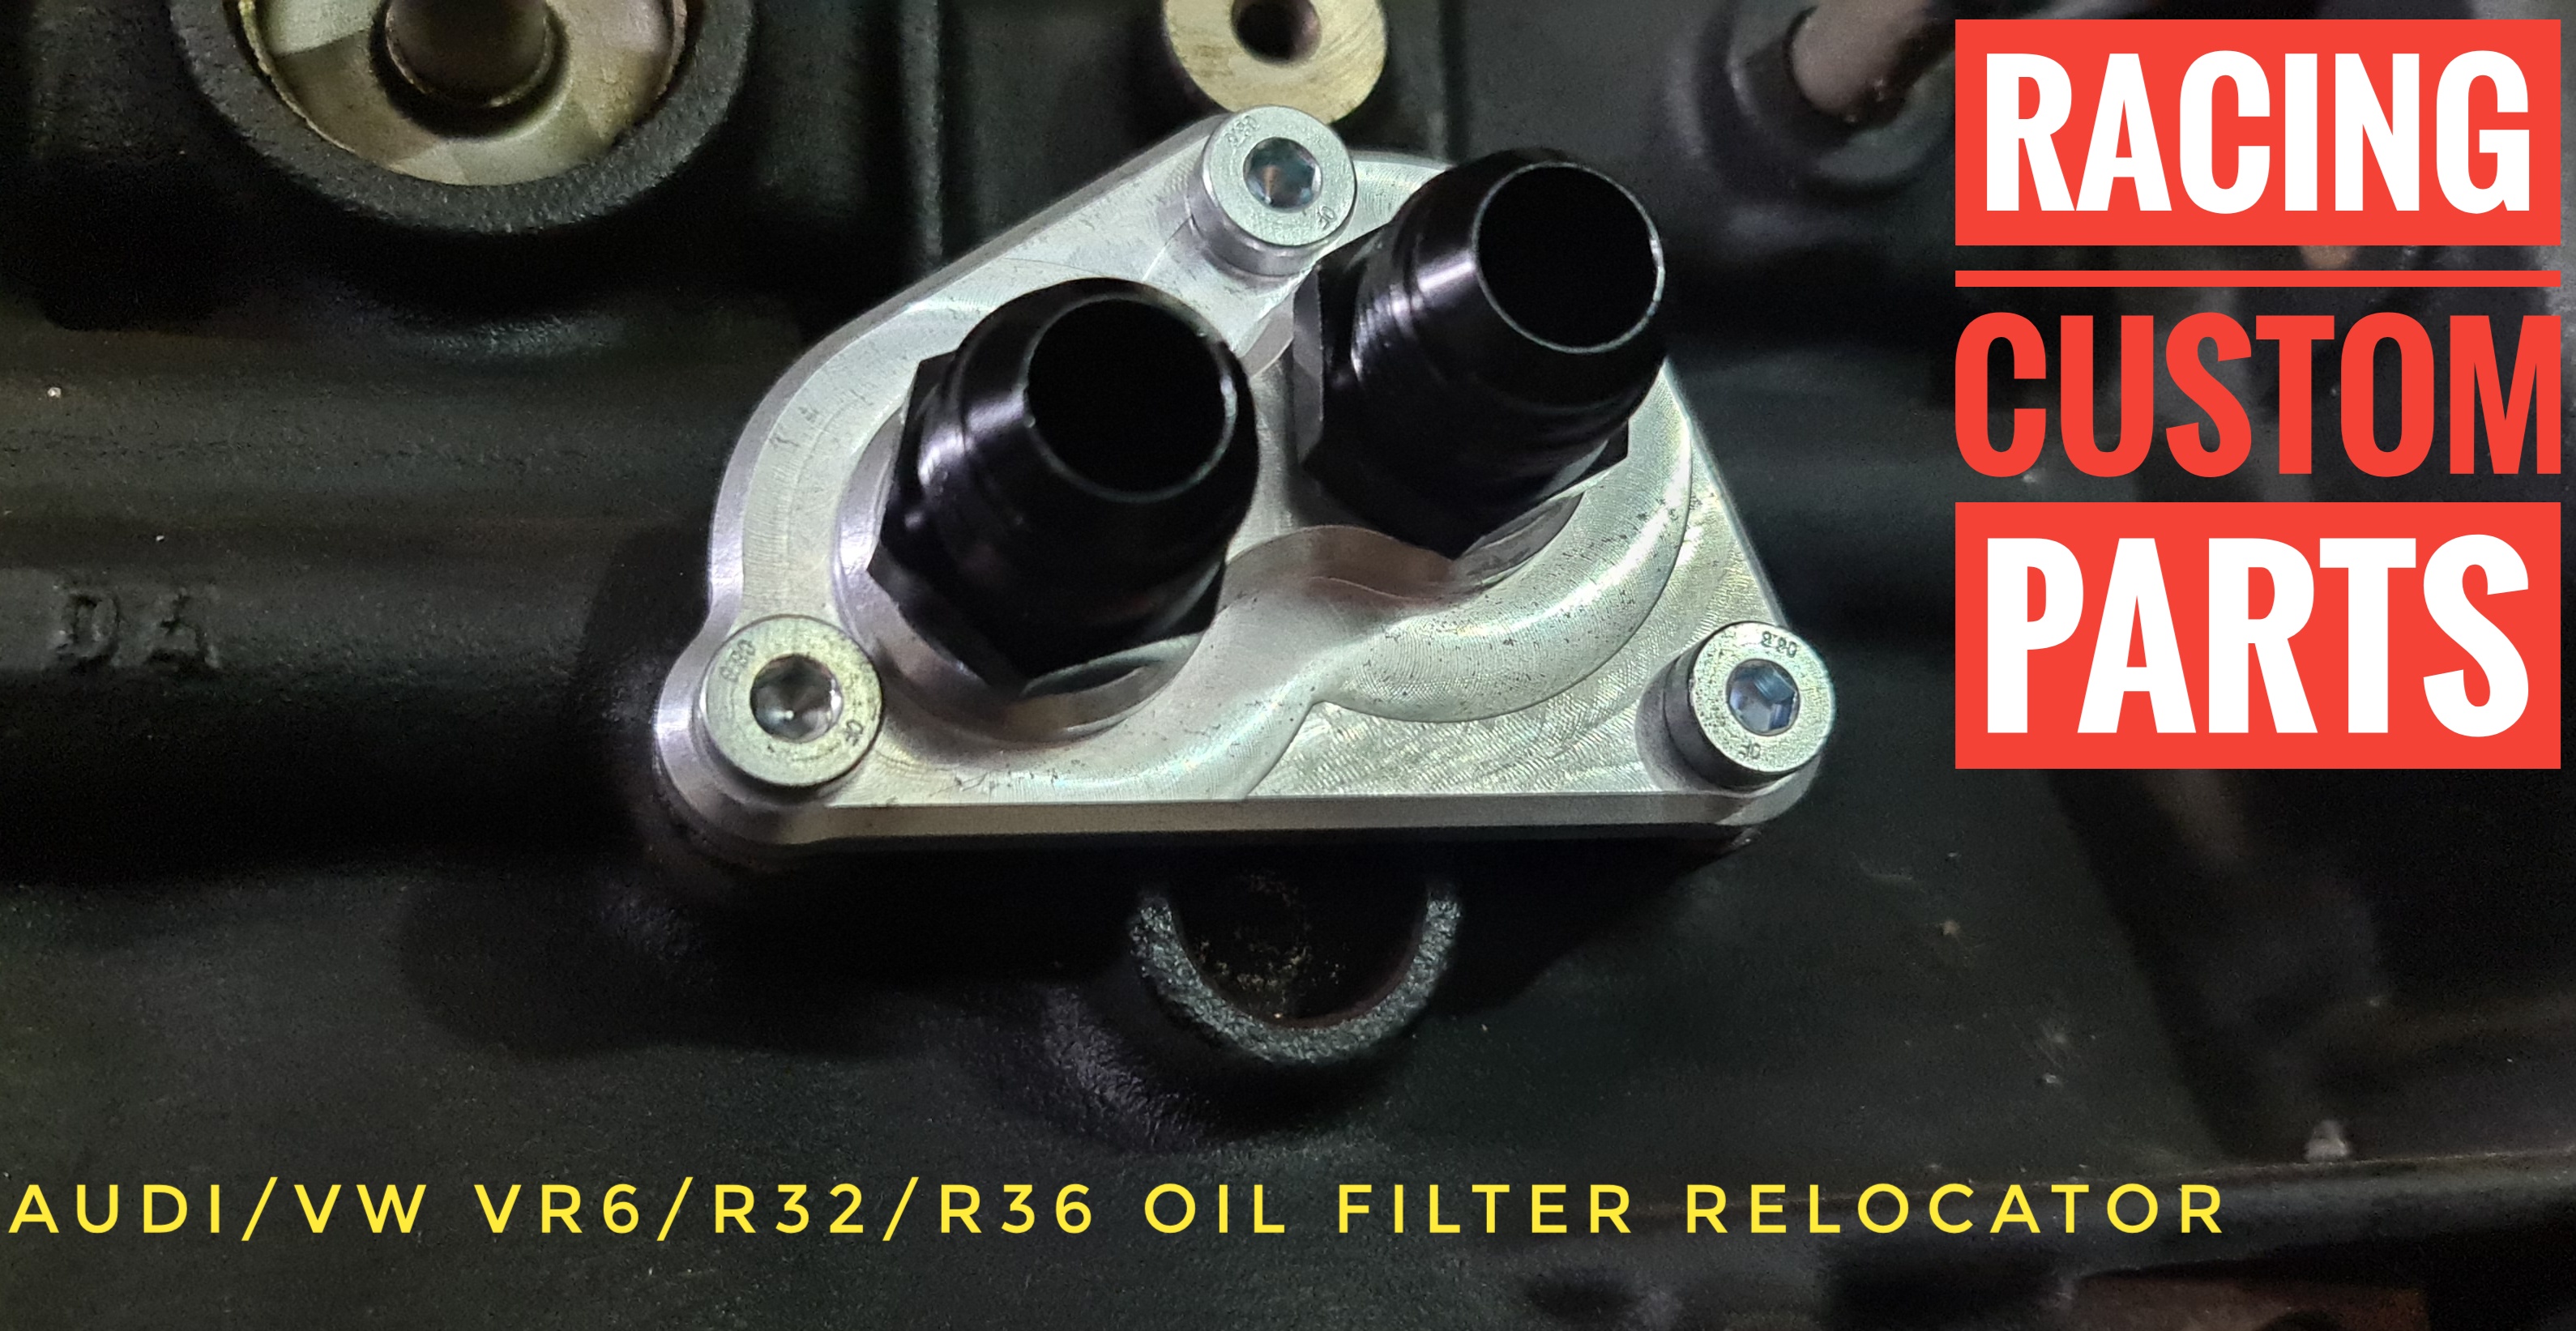 audi vw vr6 r32 r36 oil filter relocator billet cnc racing custom parts turbo